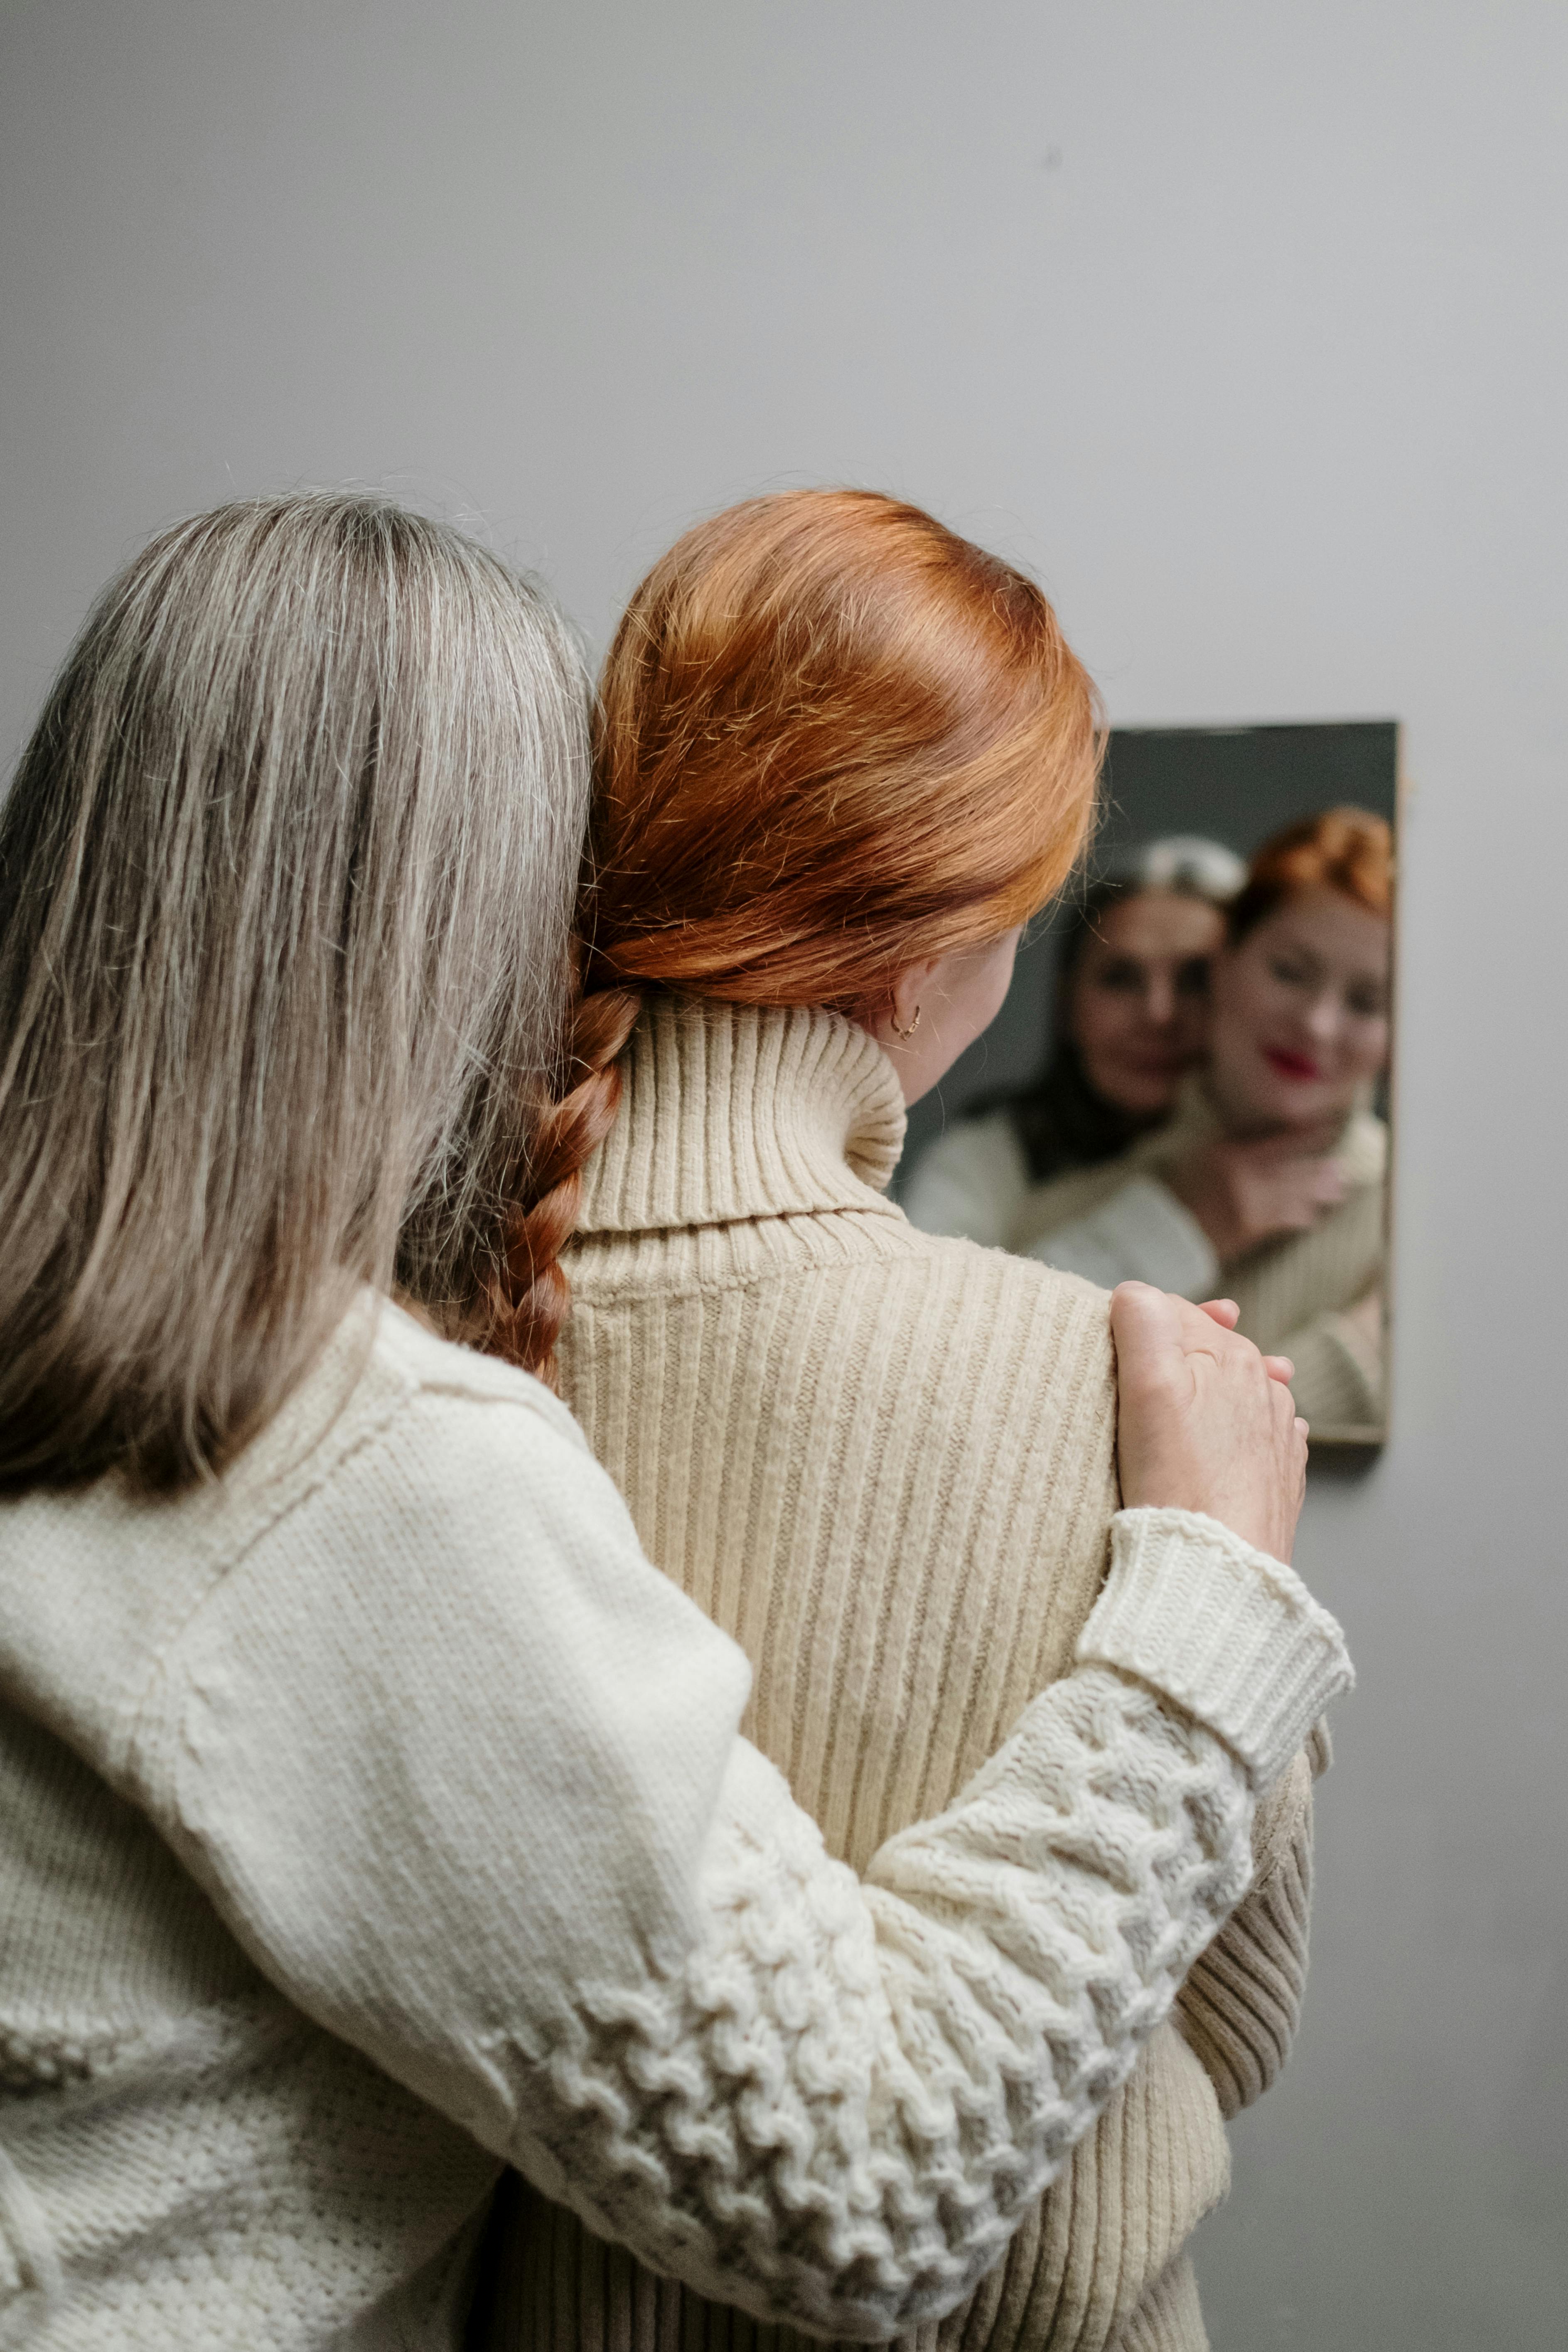 An elderly woman hugs a young woman near a mirror